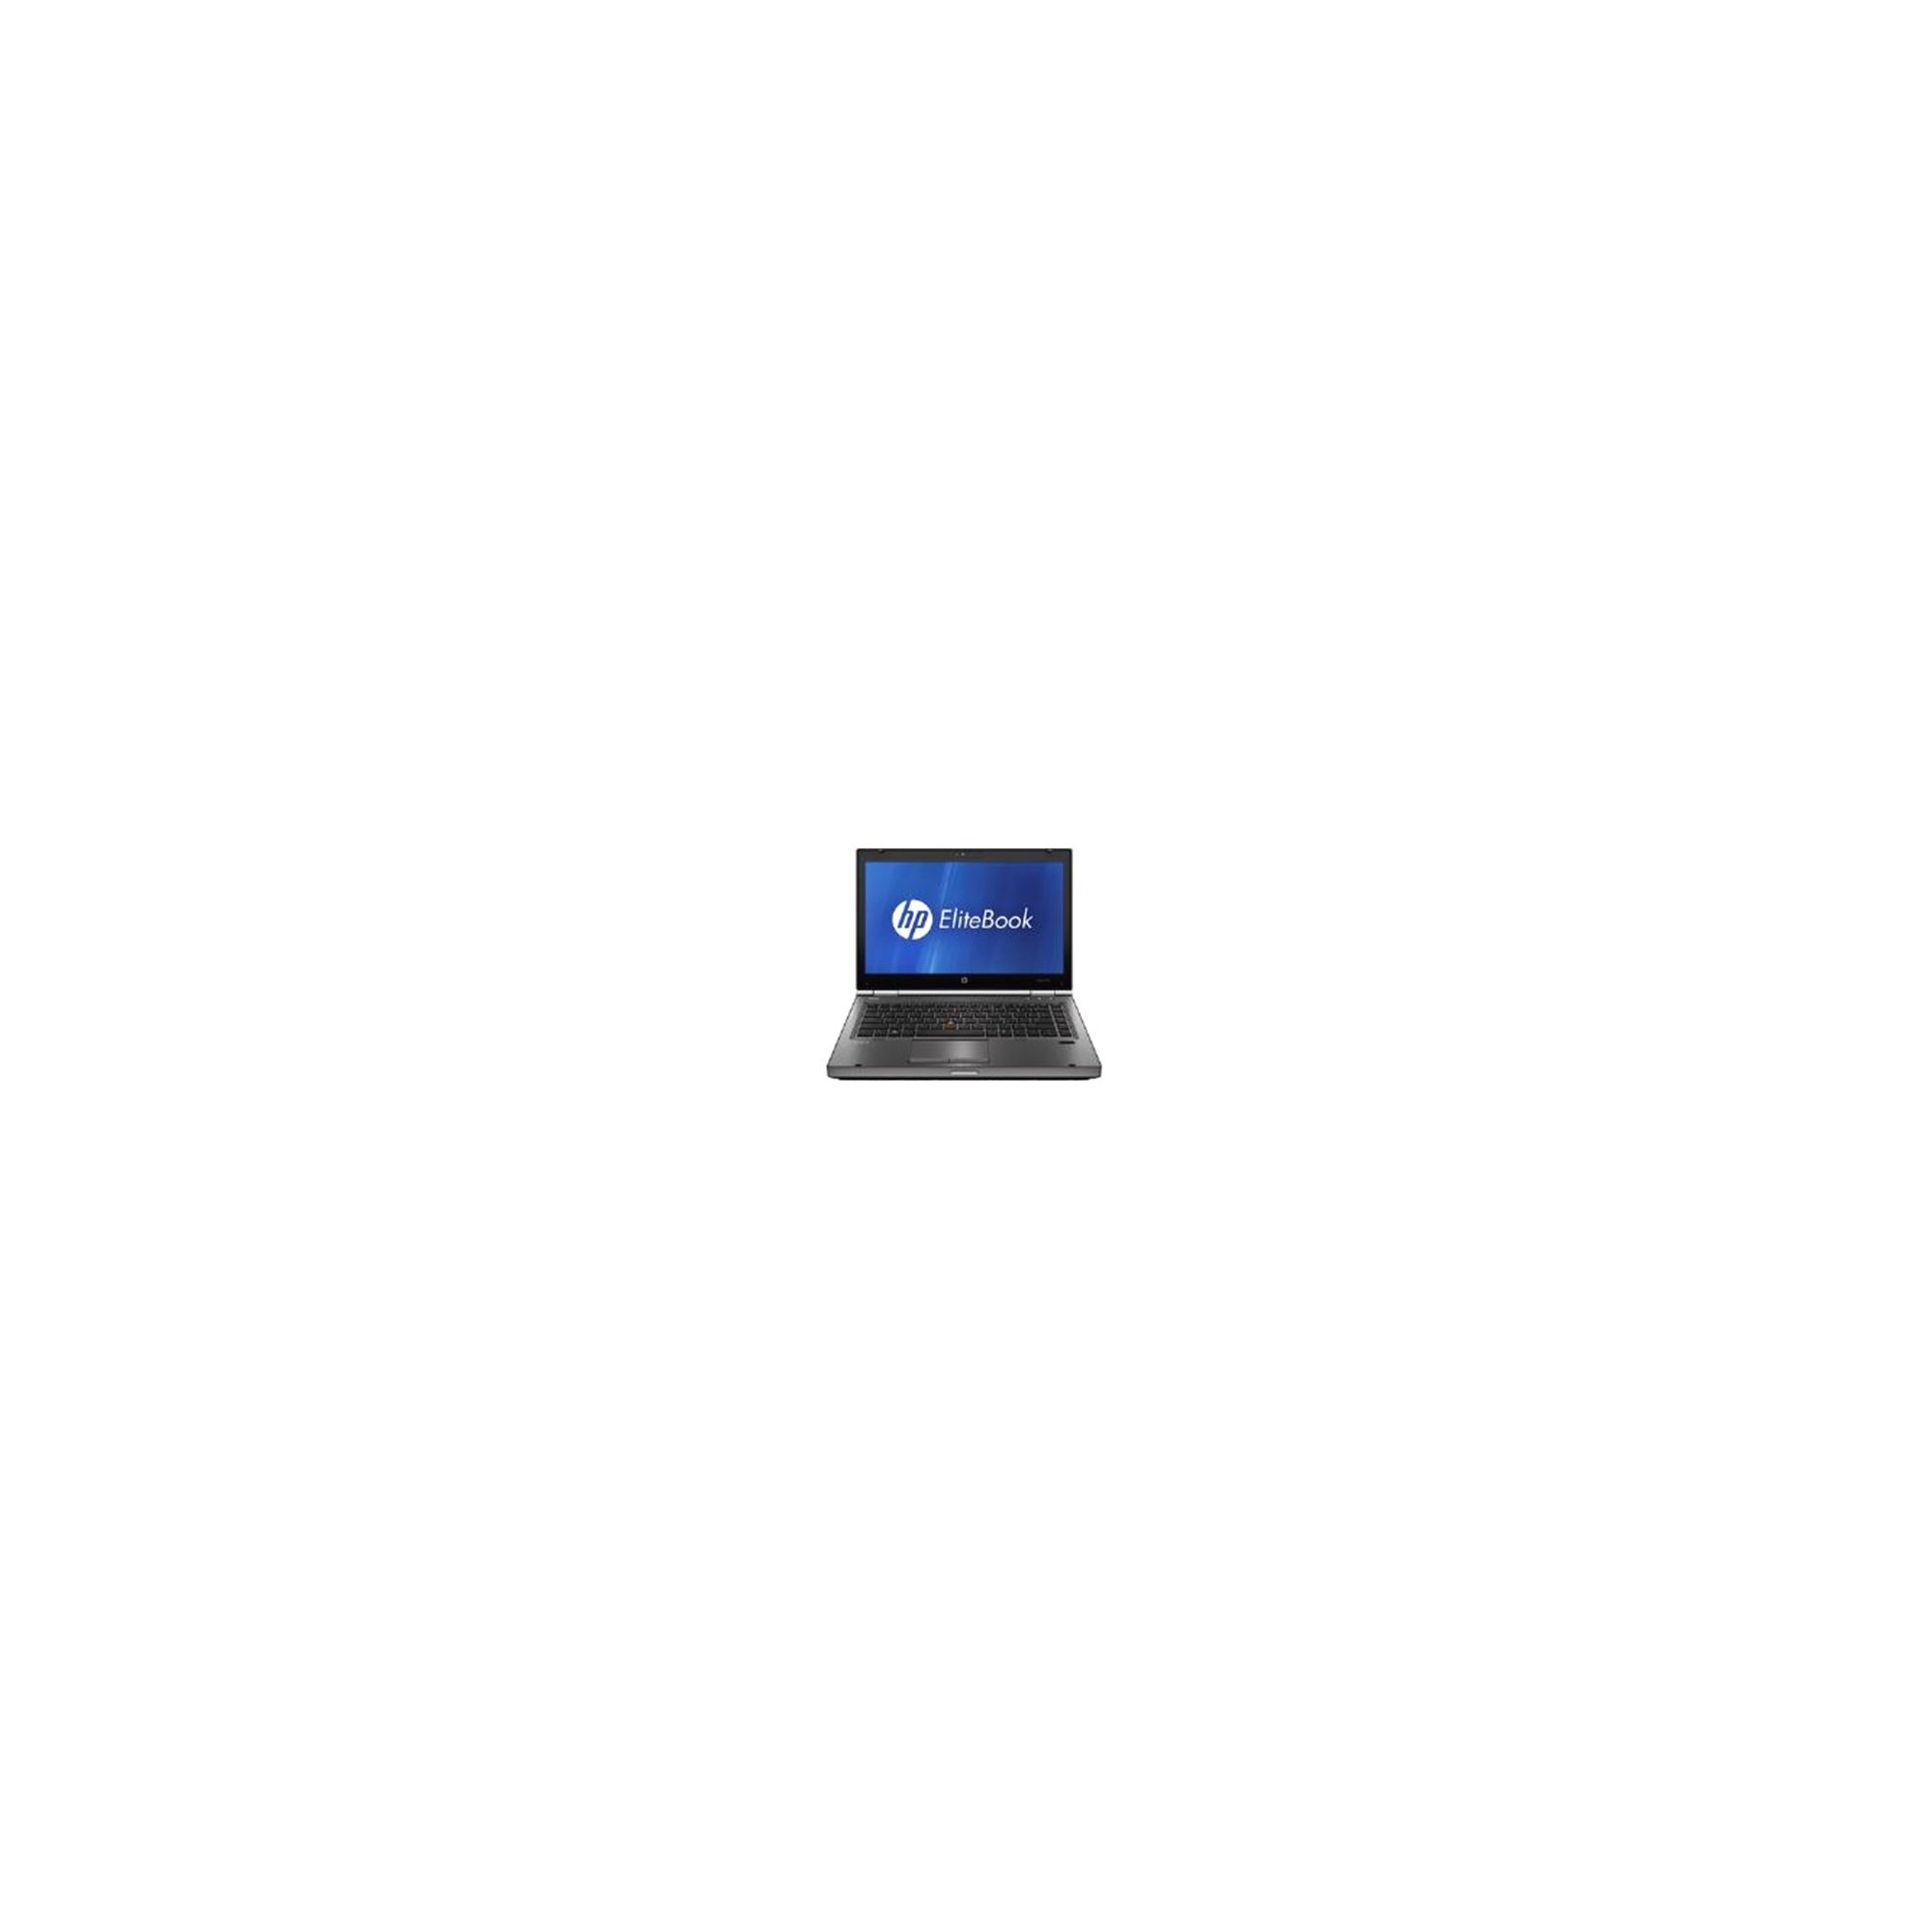 HP EliteBook 8470w Mobile Workstation Core i7 (3610QM) 2.3GHz 4GB 750GB+24GB SSD DVD±RW SM DL WLAN BT Webcam Windows 7 Pro 64-bit (FirePro M2000 1GB)